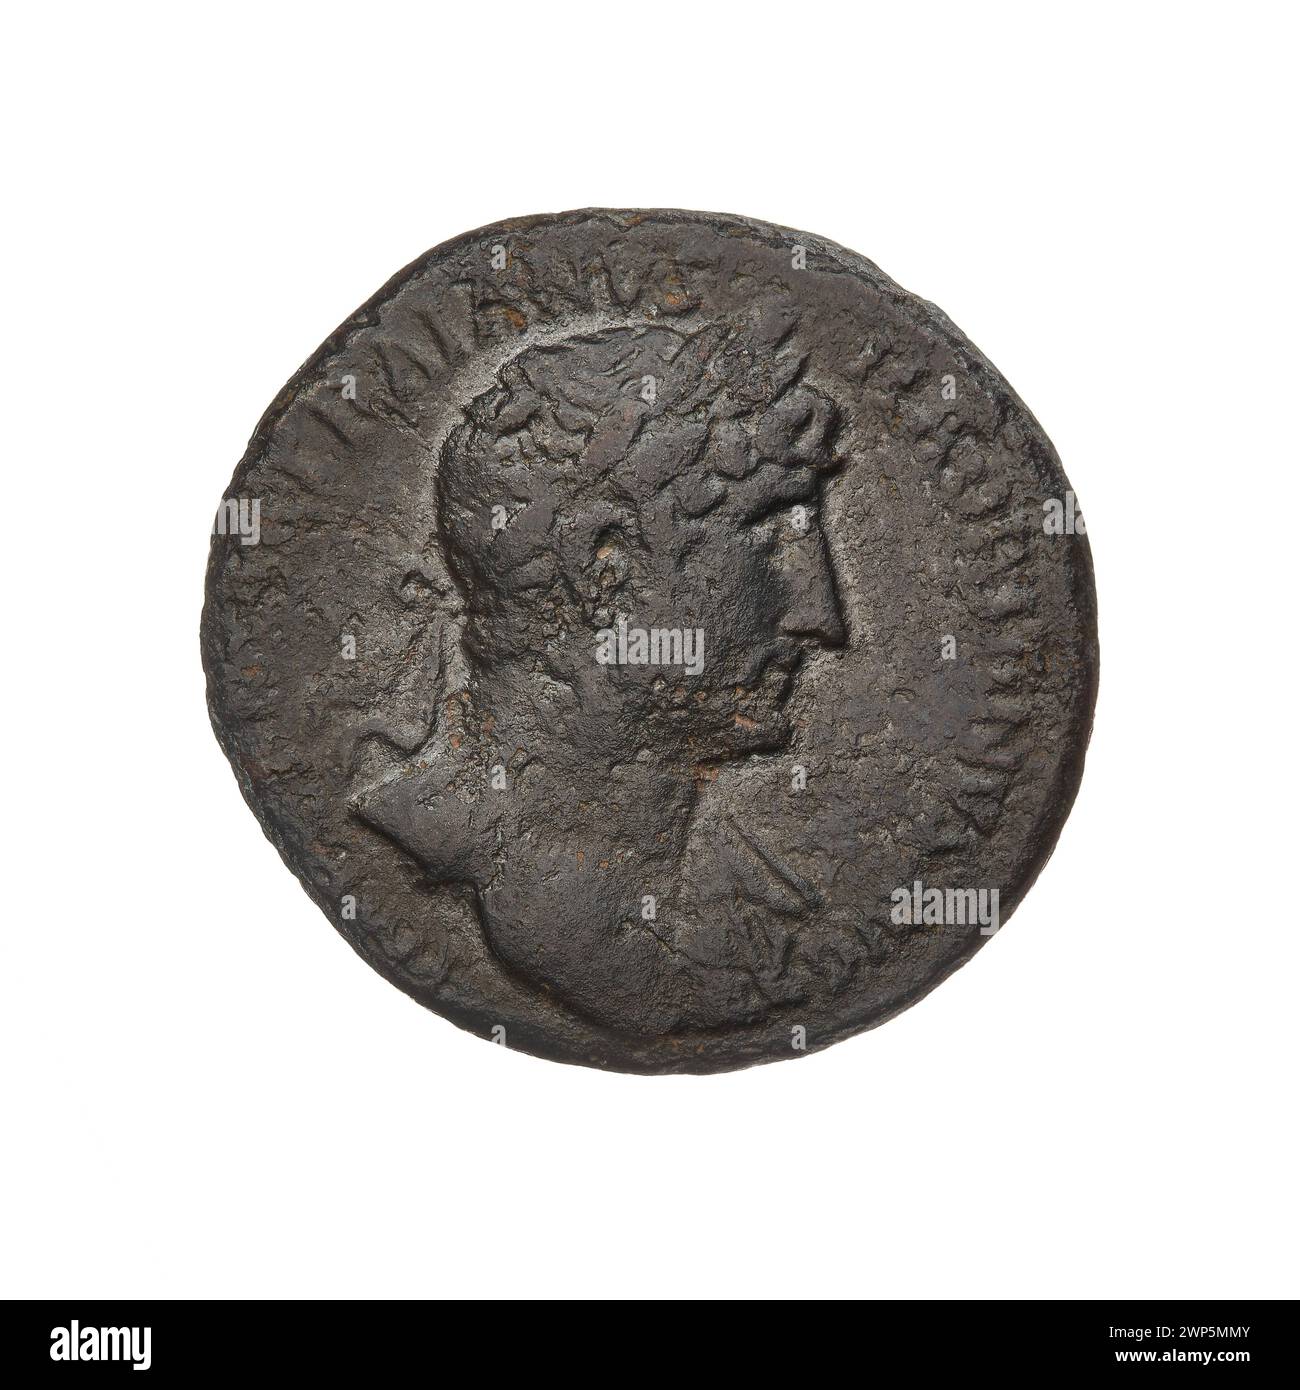 AS; Hadrian (76-138; Roman emperor 117-138); 119 (118-00-00-118-00-00);Genius (mitol.), Busters, abundance horns, laurel wreaths Stock Photo